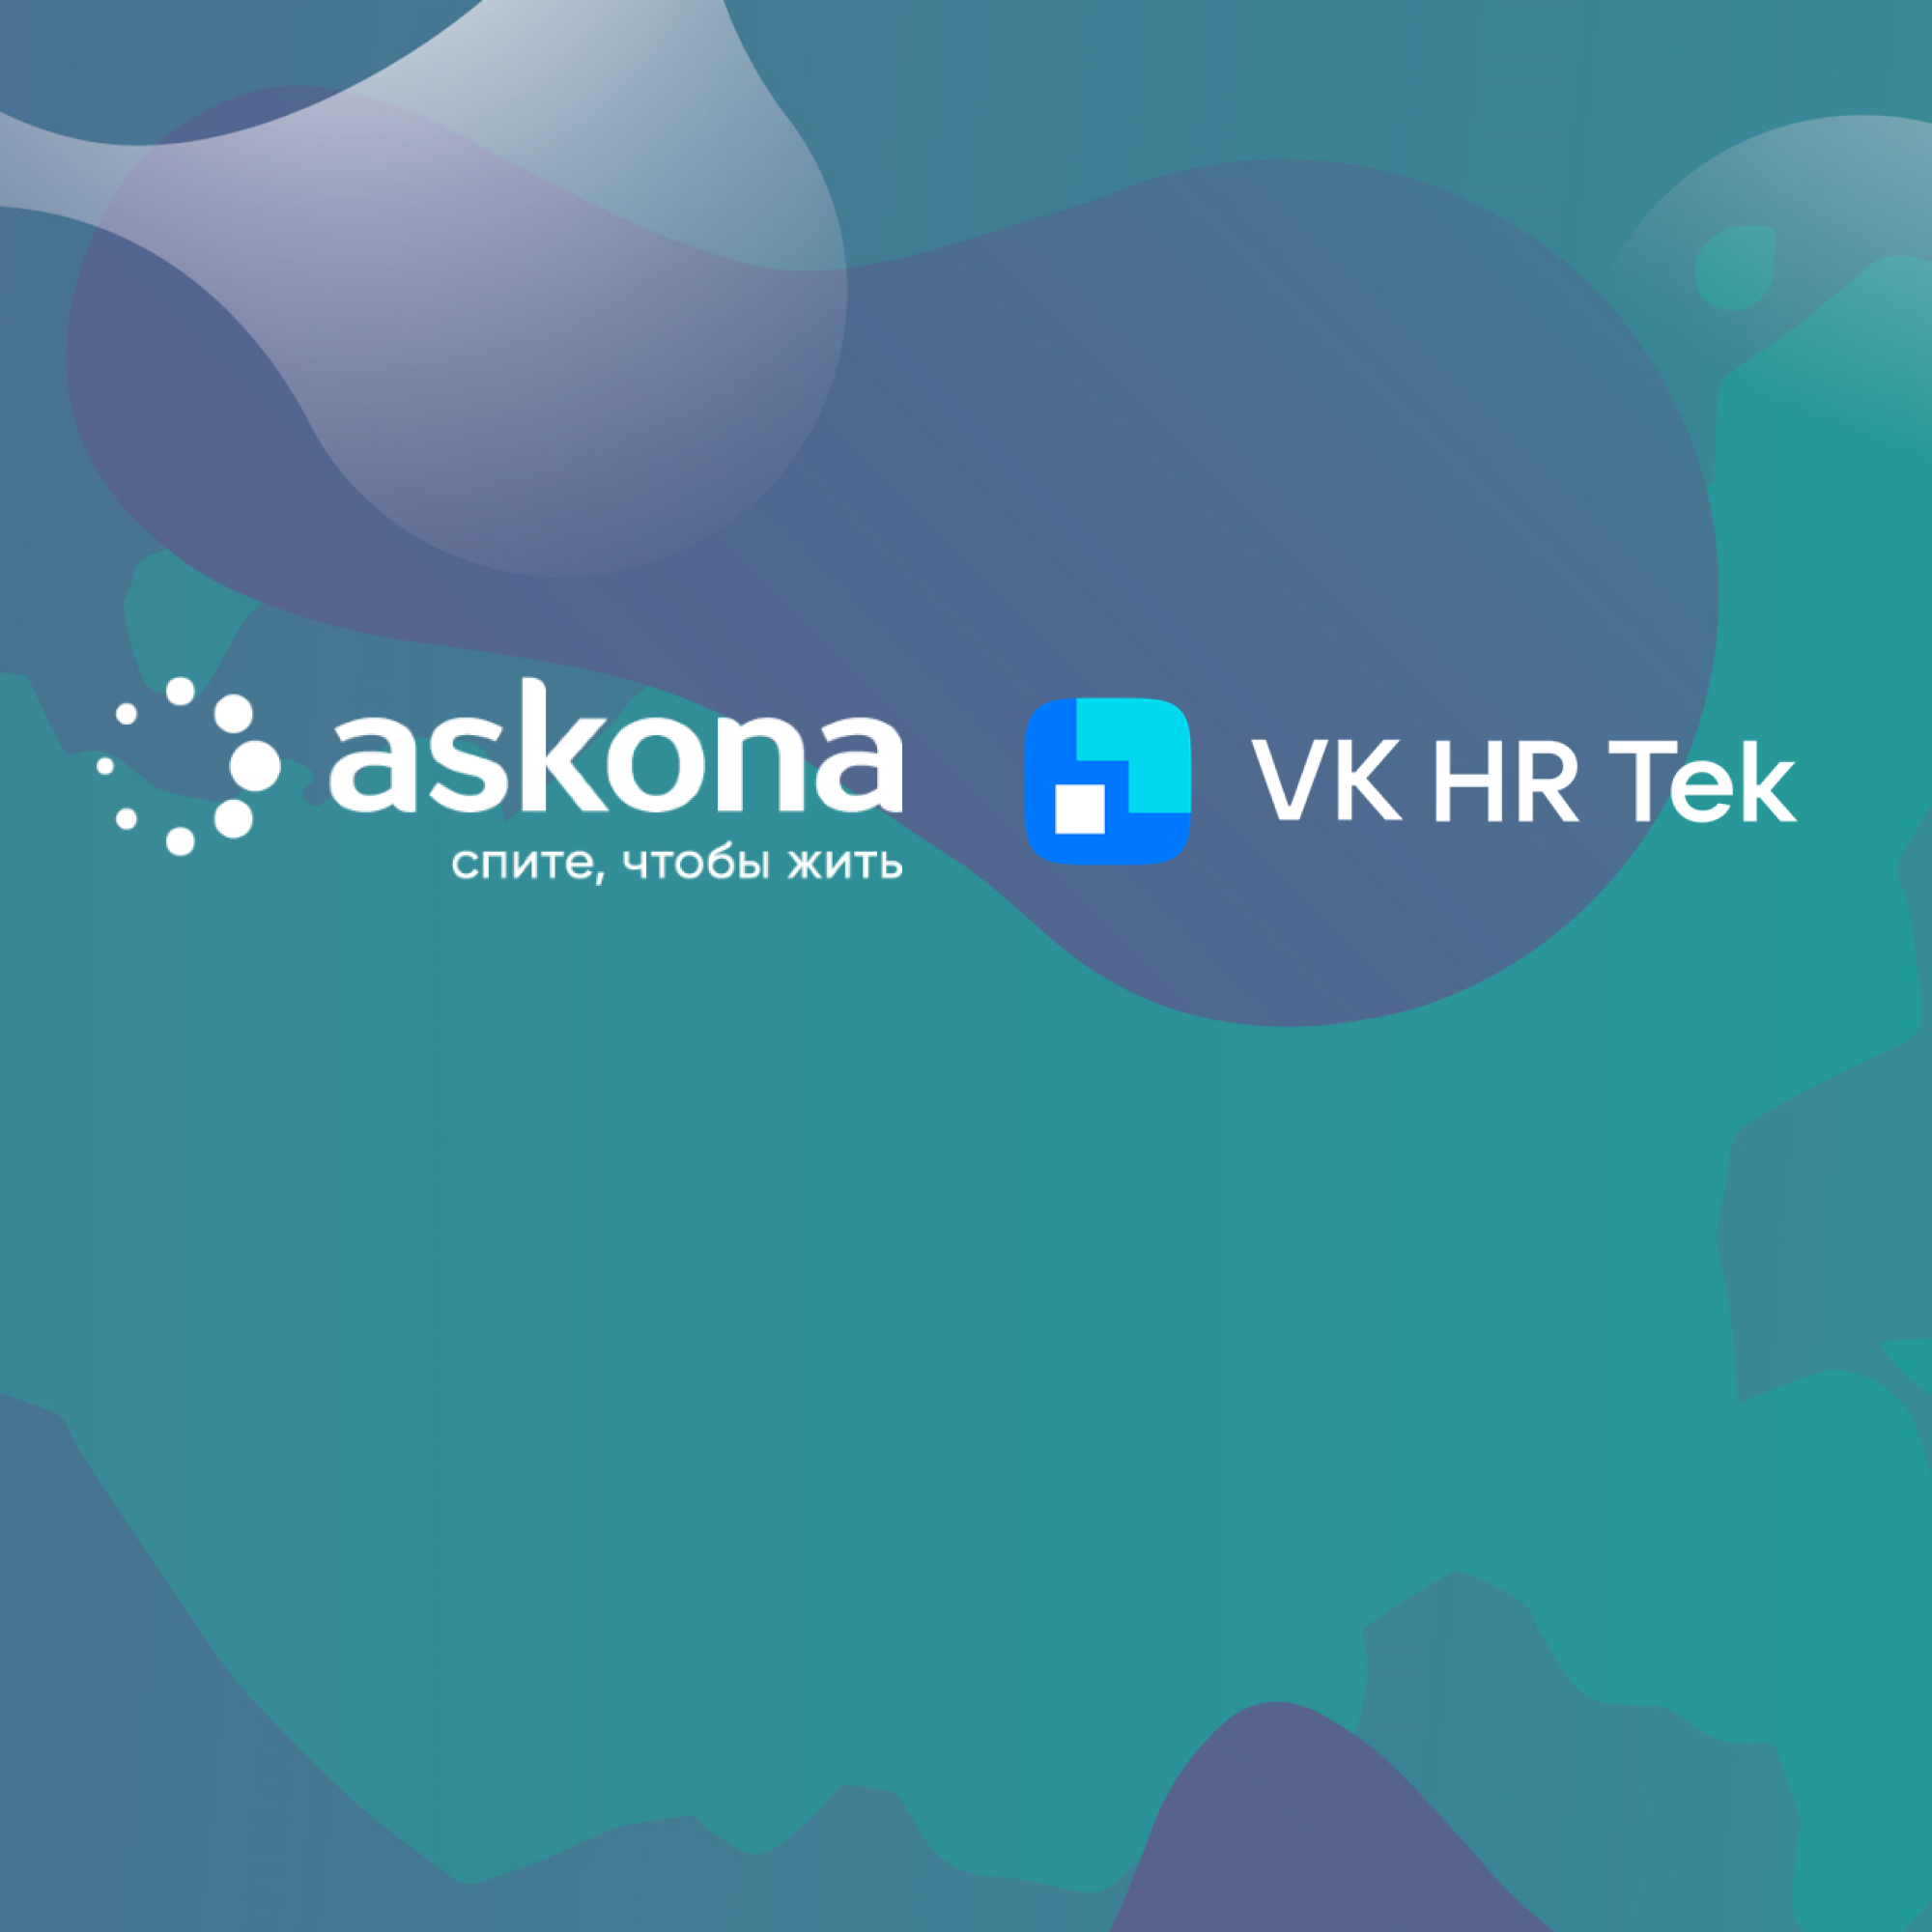 Askona переходит на кадровый электронный документооборот VK HR Tek